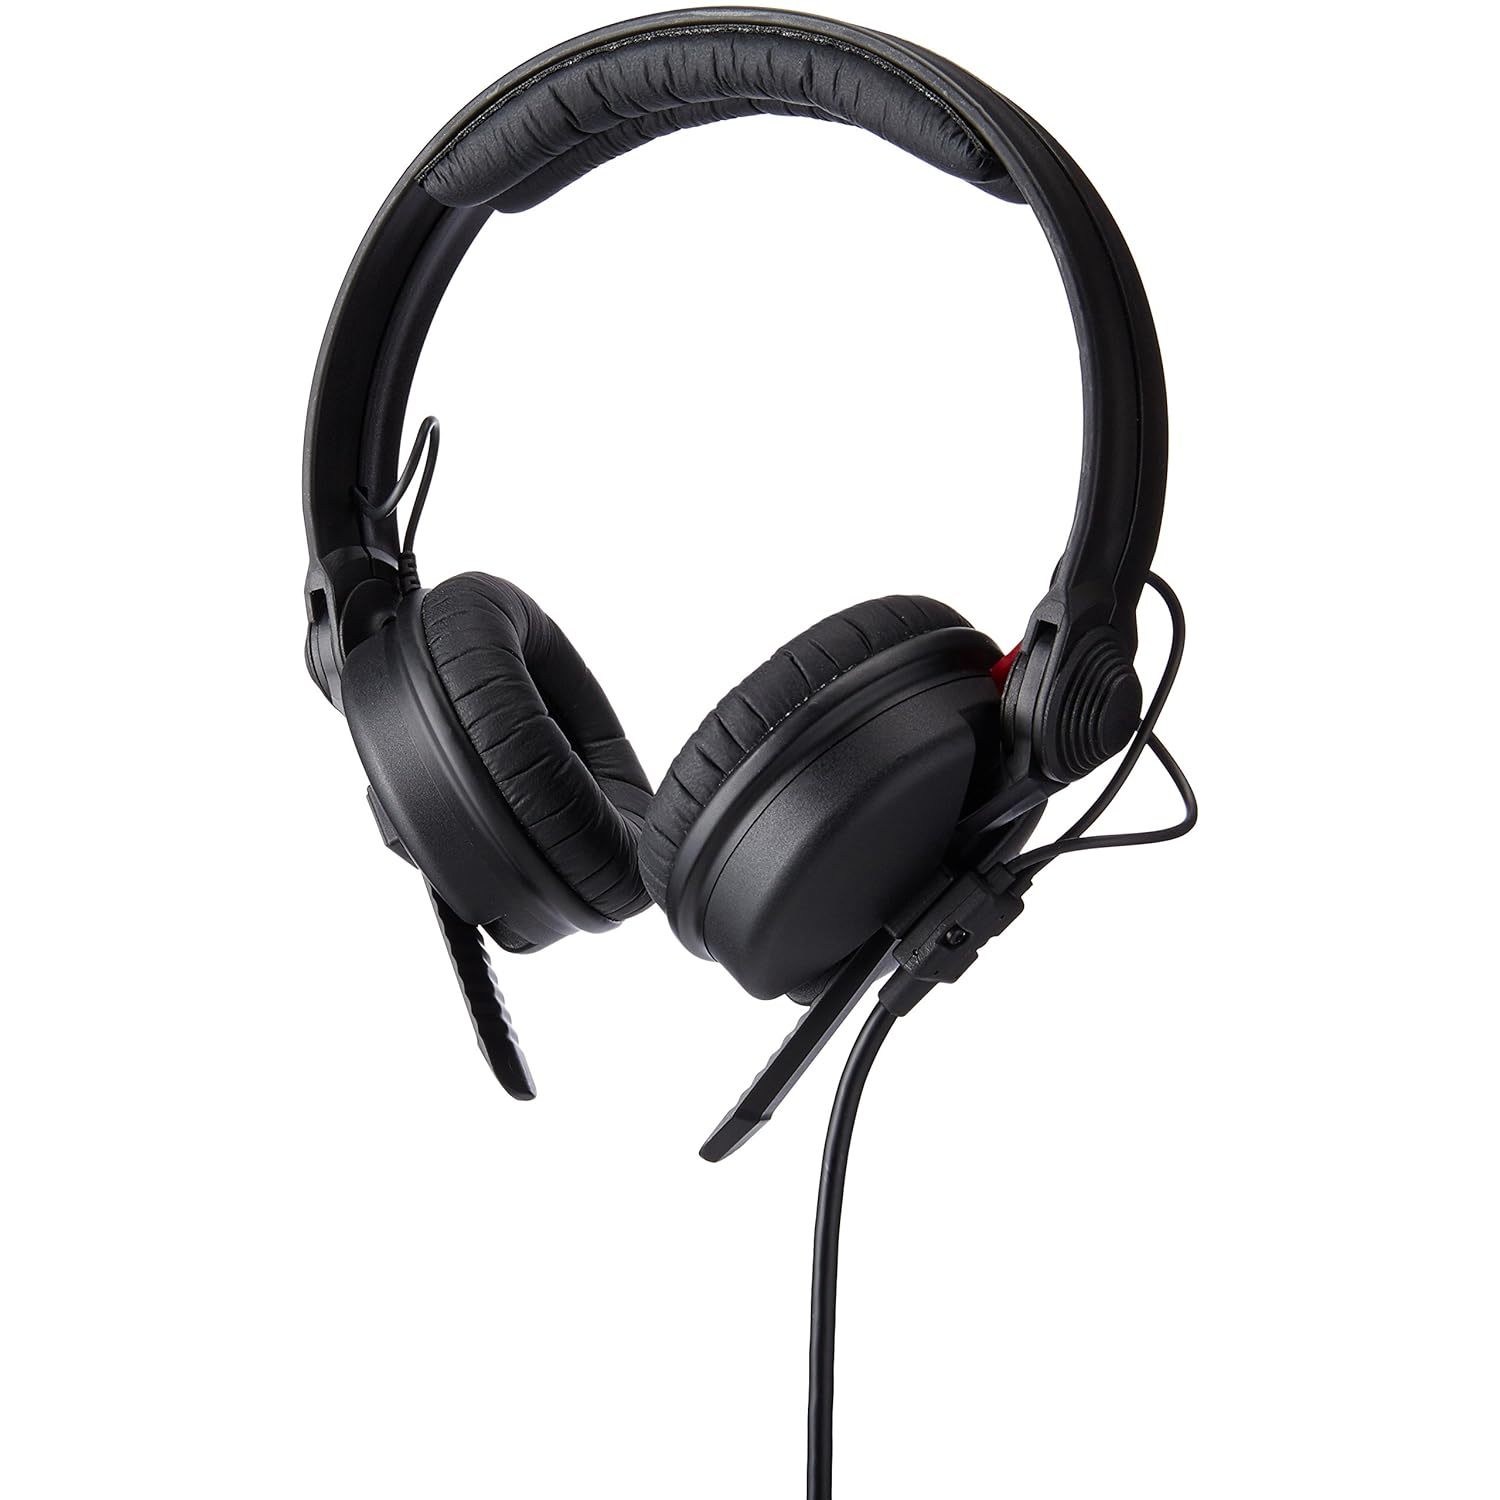 Sennheiser Professional Hd 25 Plus On-Ear Monitor Headphones - $296.39